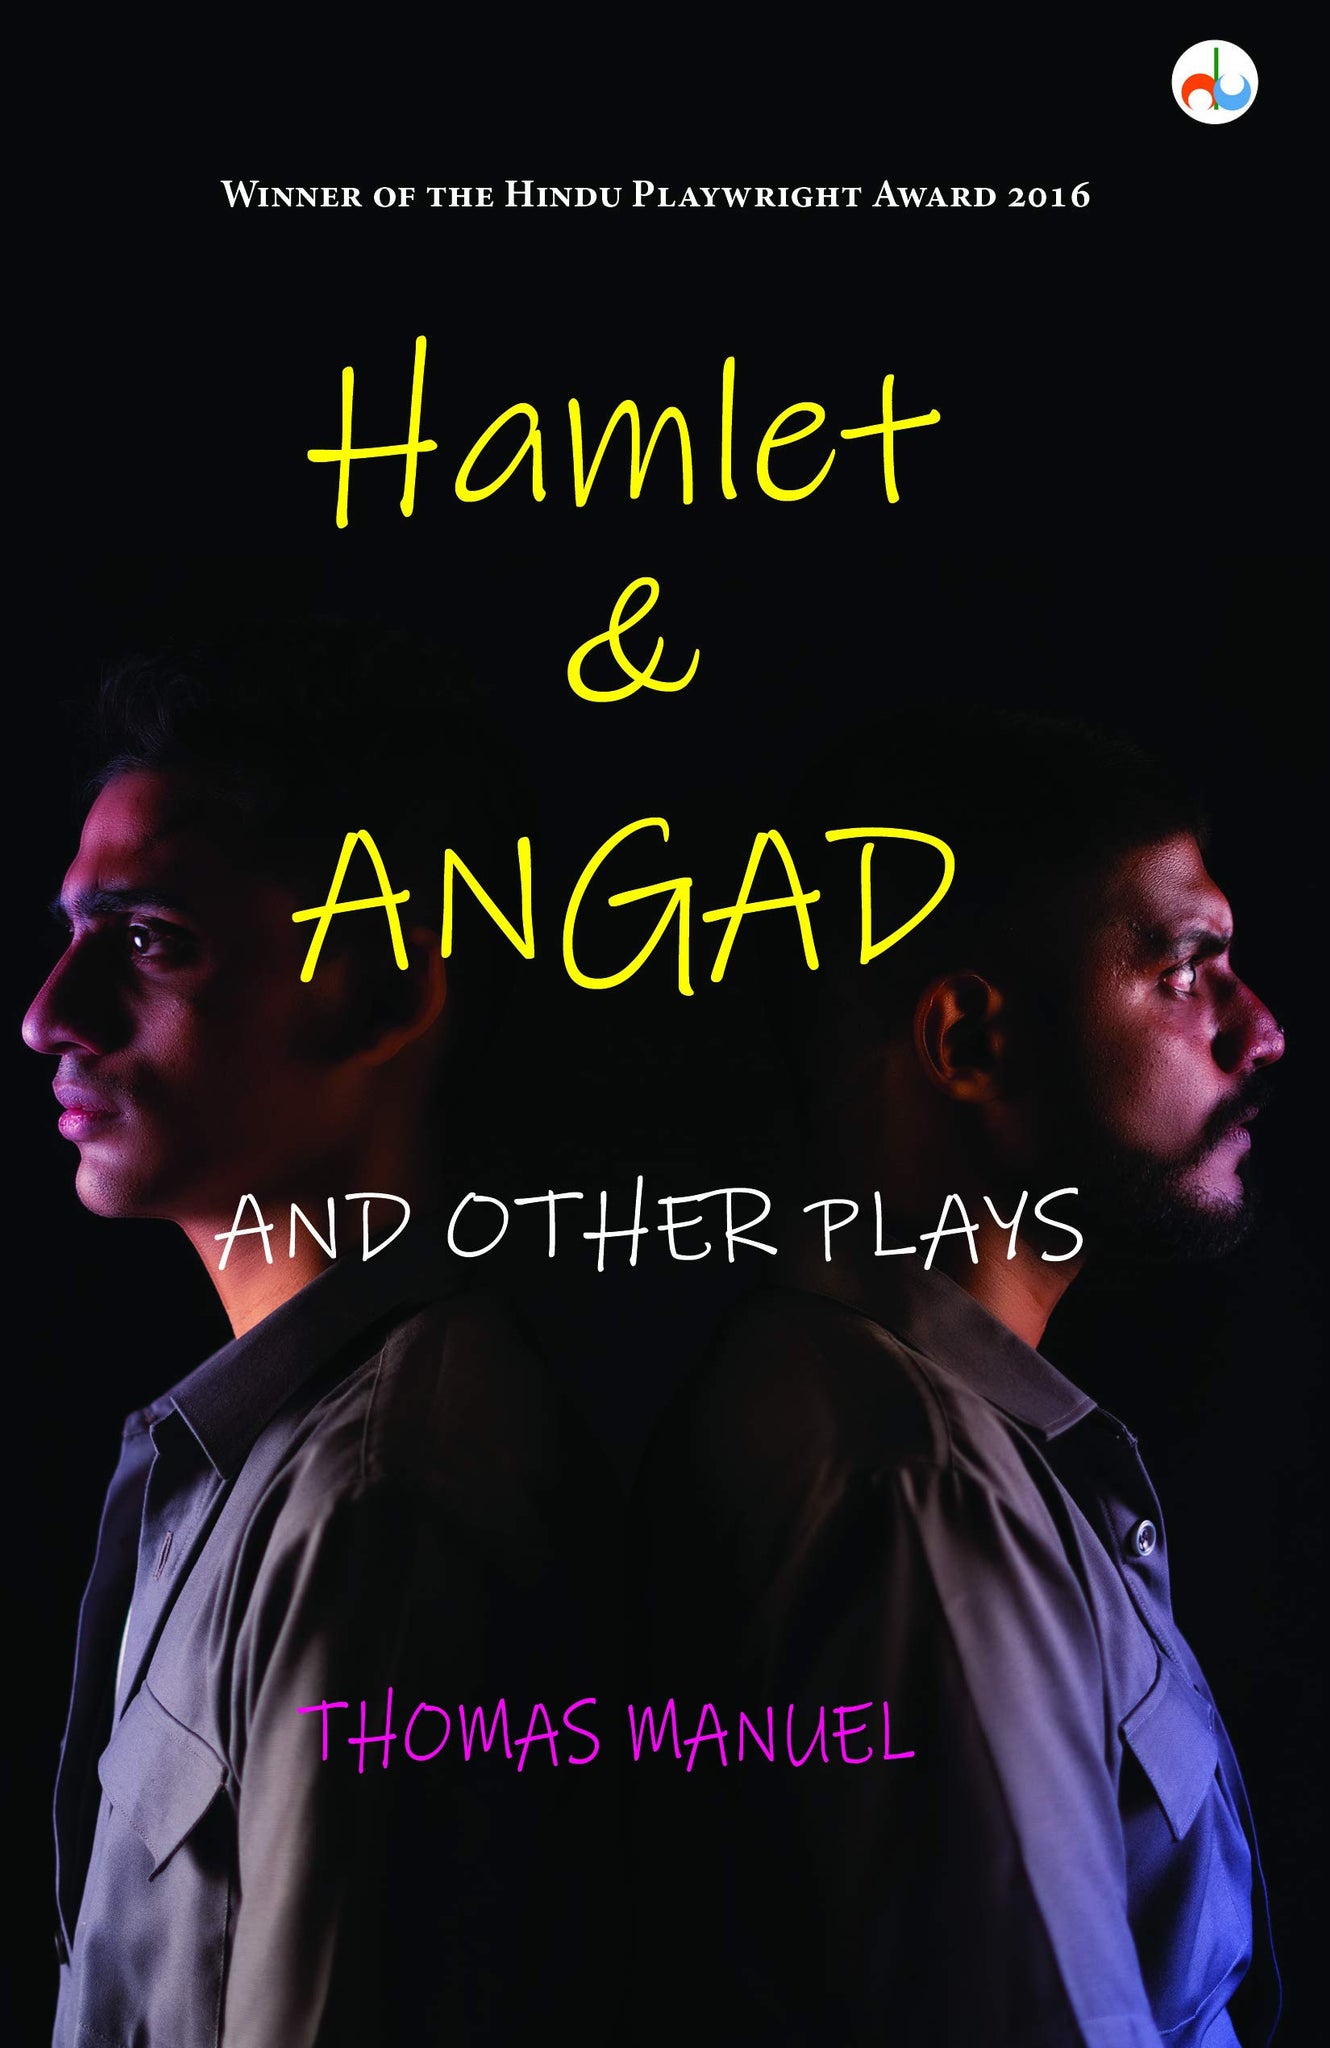 Hamlet & Angad